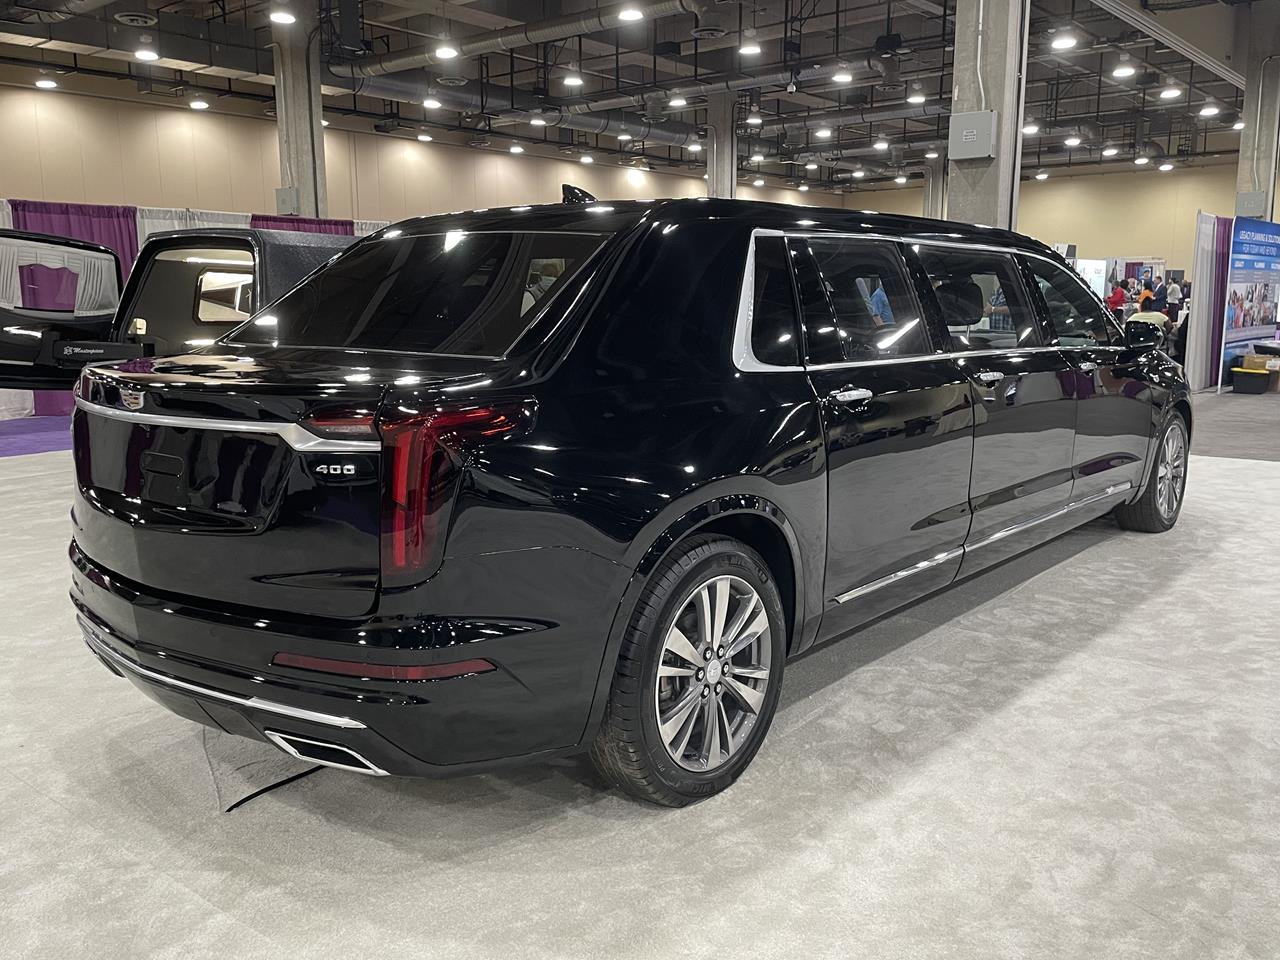 2021 Cadillac SS XT6 Presidential Limousine 819 3